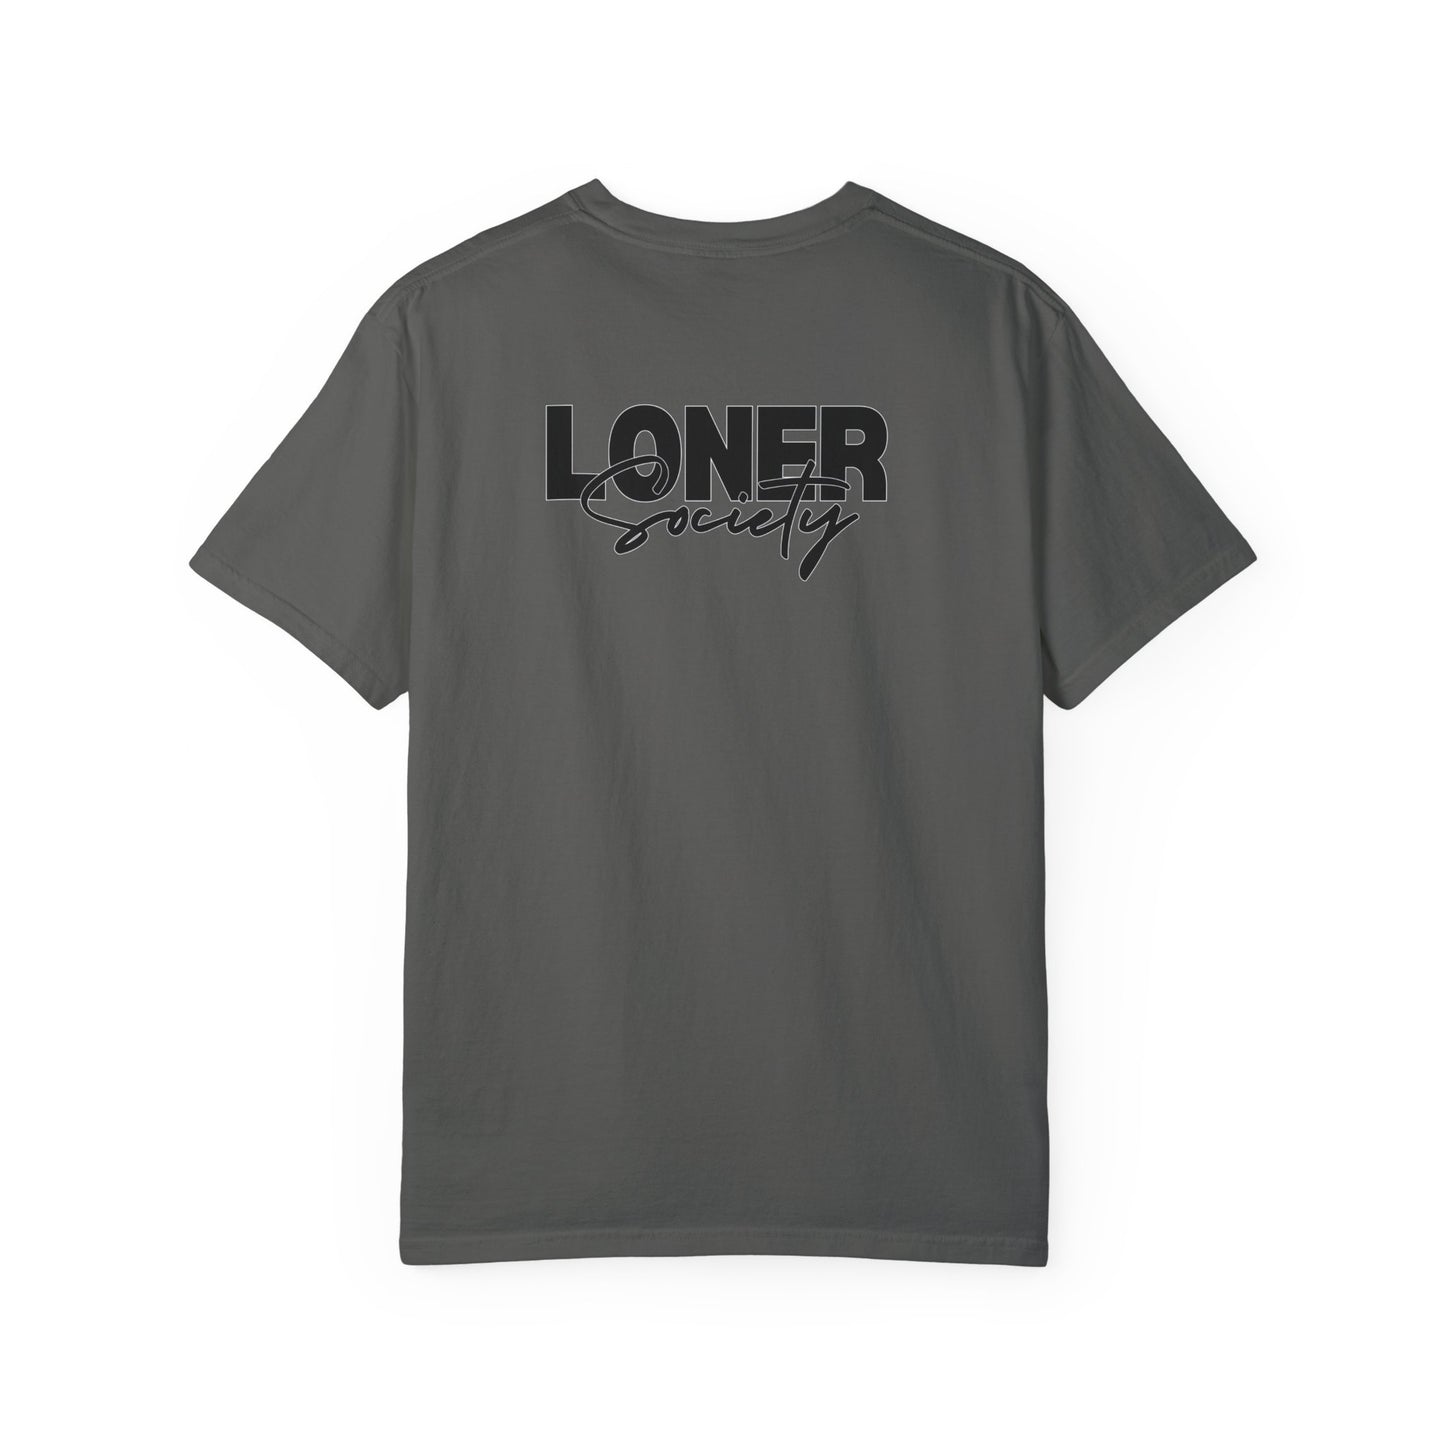 Loner Society - Comfort Colors T-shirt